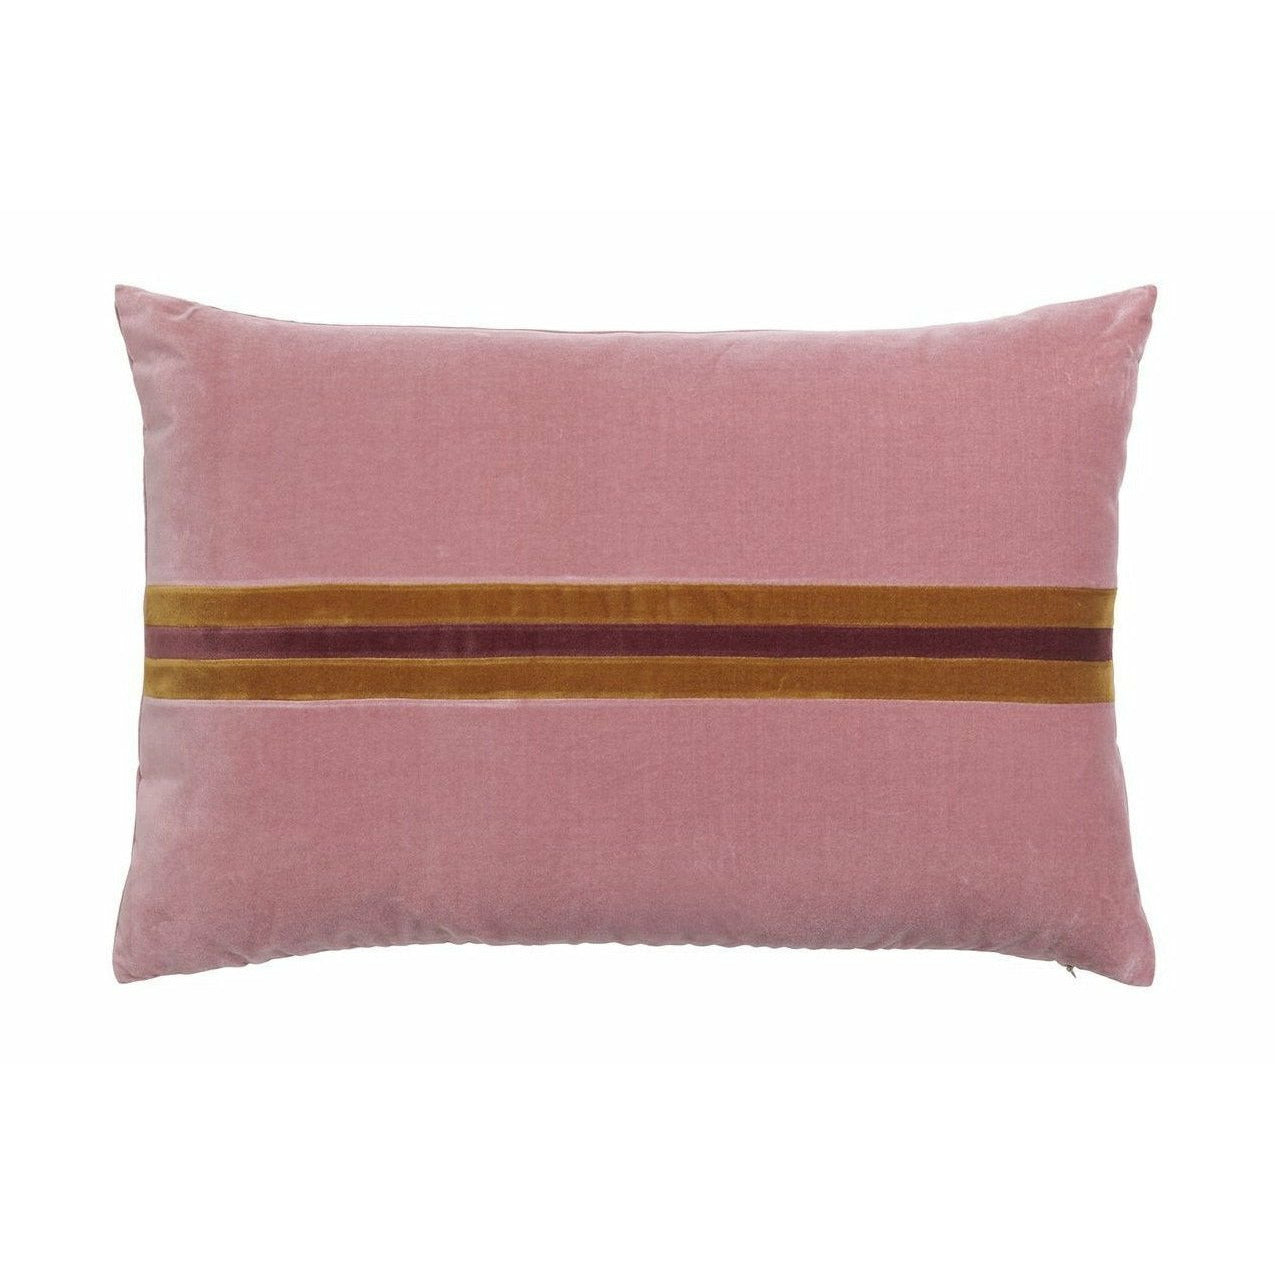 Christina Lundsteen Harlow Velvet Pillow, Old Rose/Caramel/Prune